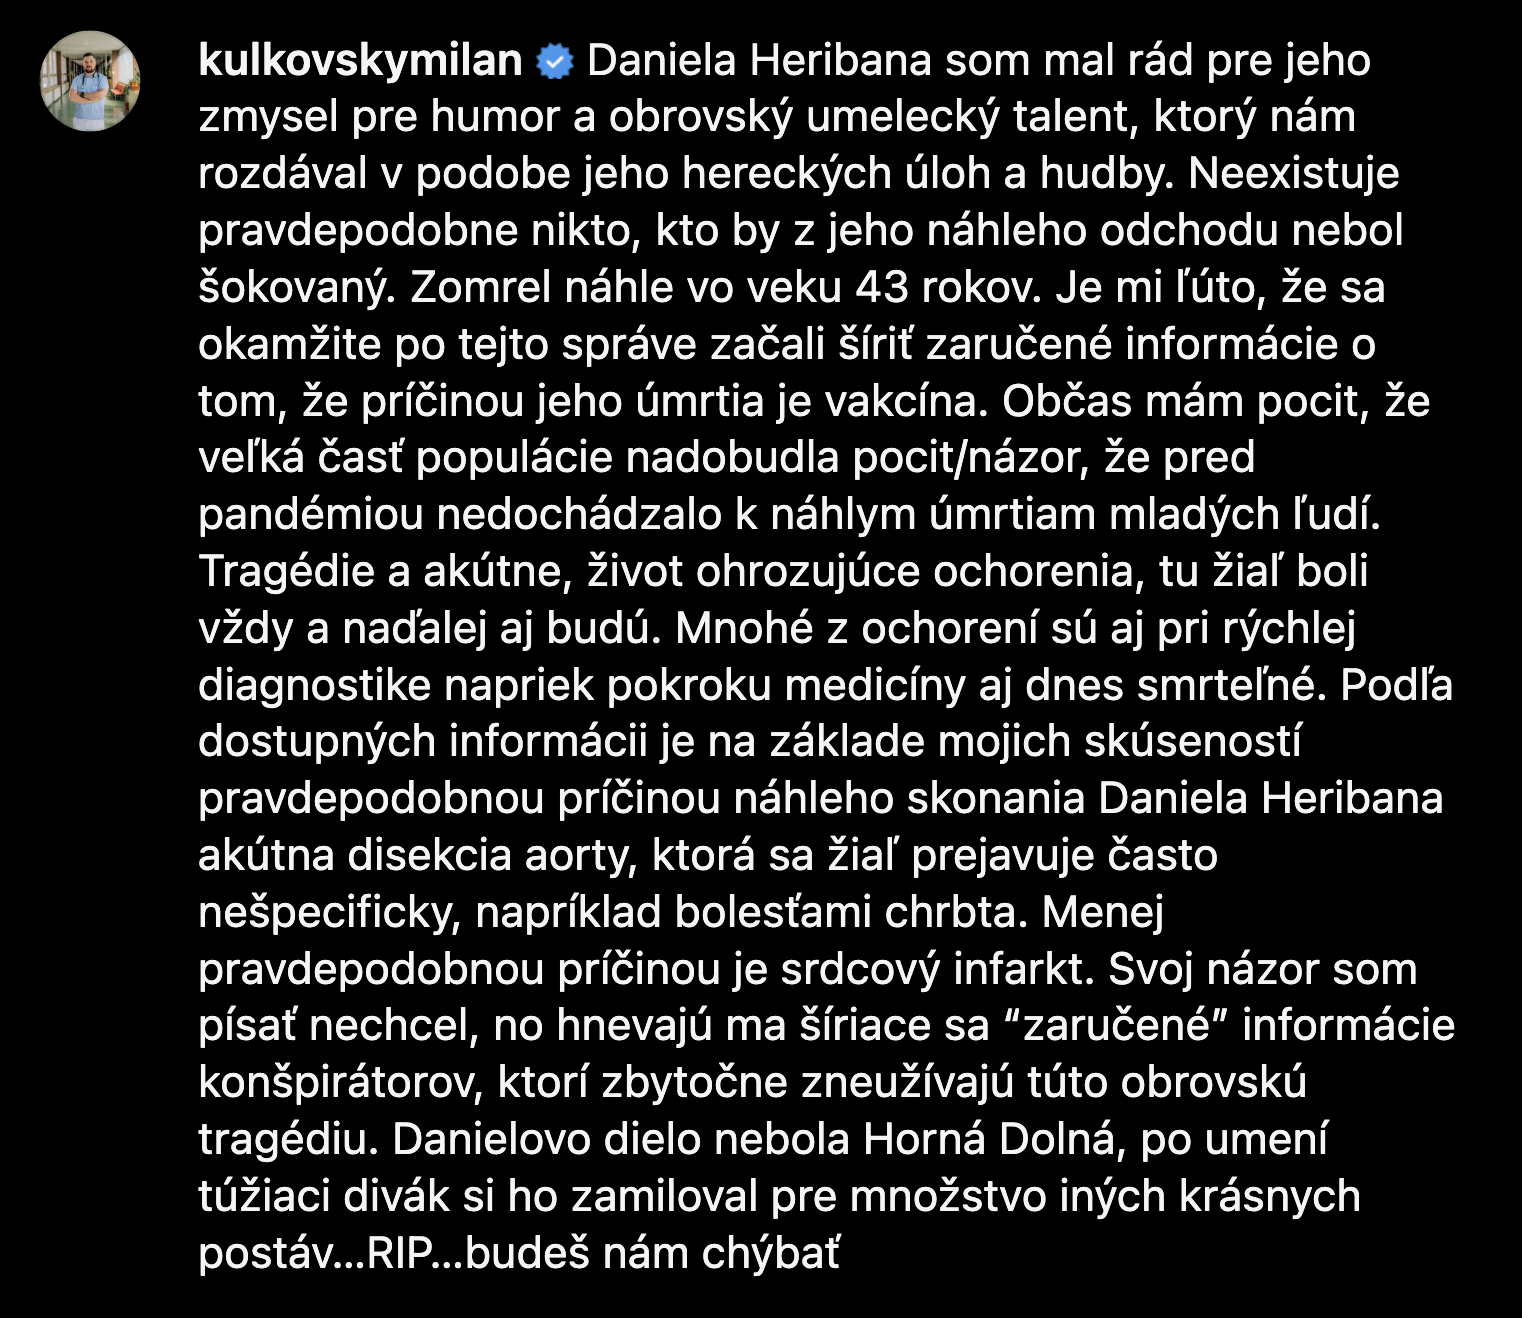 Primár Interného oddelenia NsP Považská Bystrica Milan Kulkovský reaguje na úmrtie herca Dana Heribana.